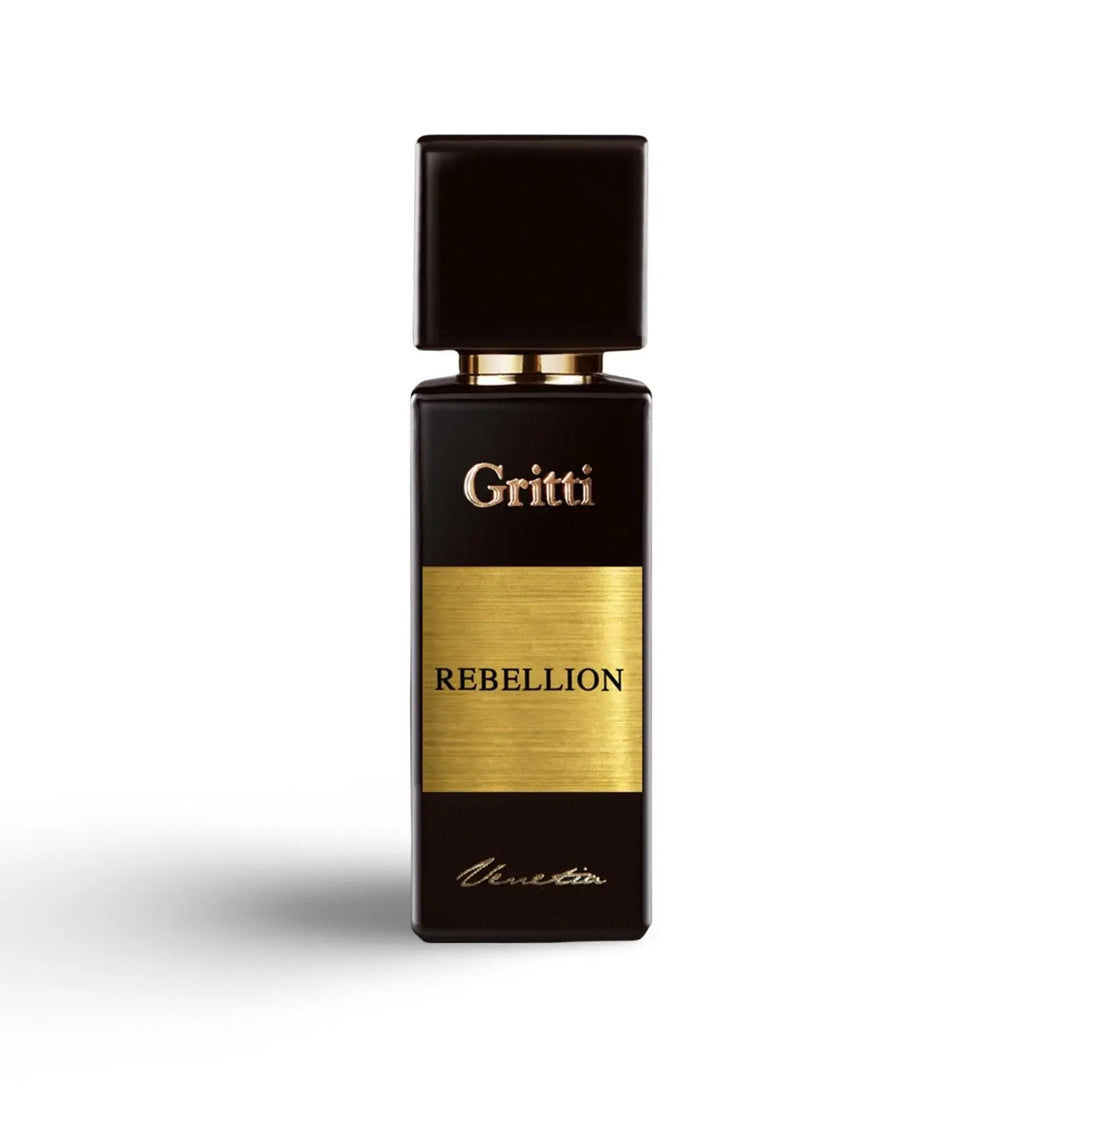 Rebellion eau de parfum Gritti 100ml